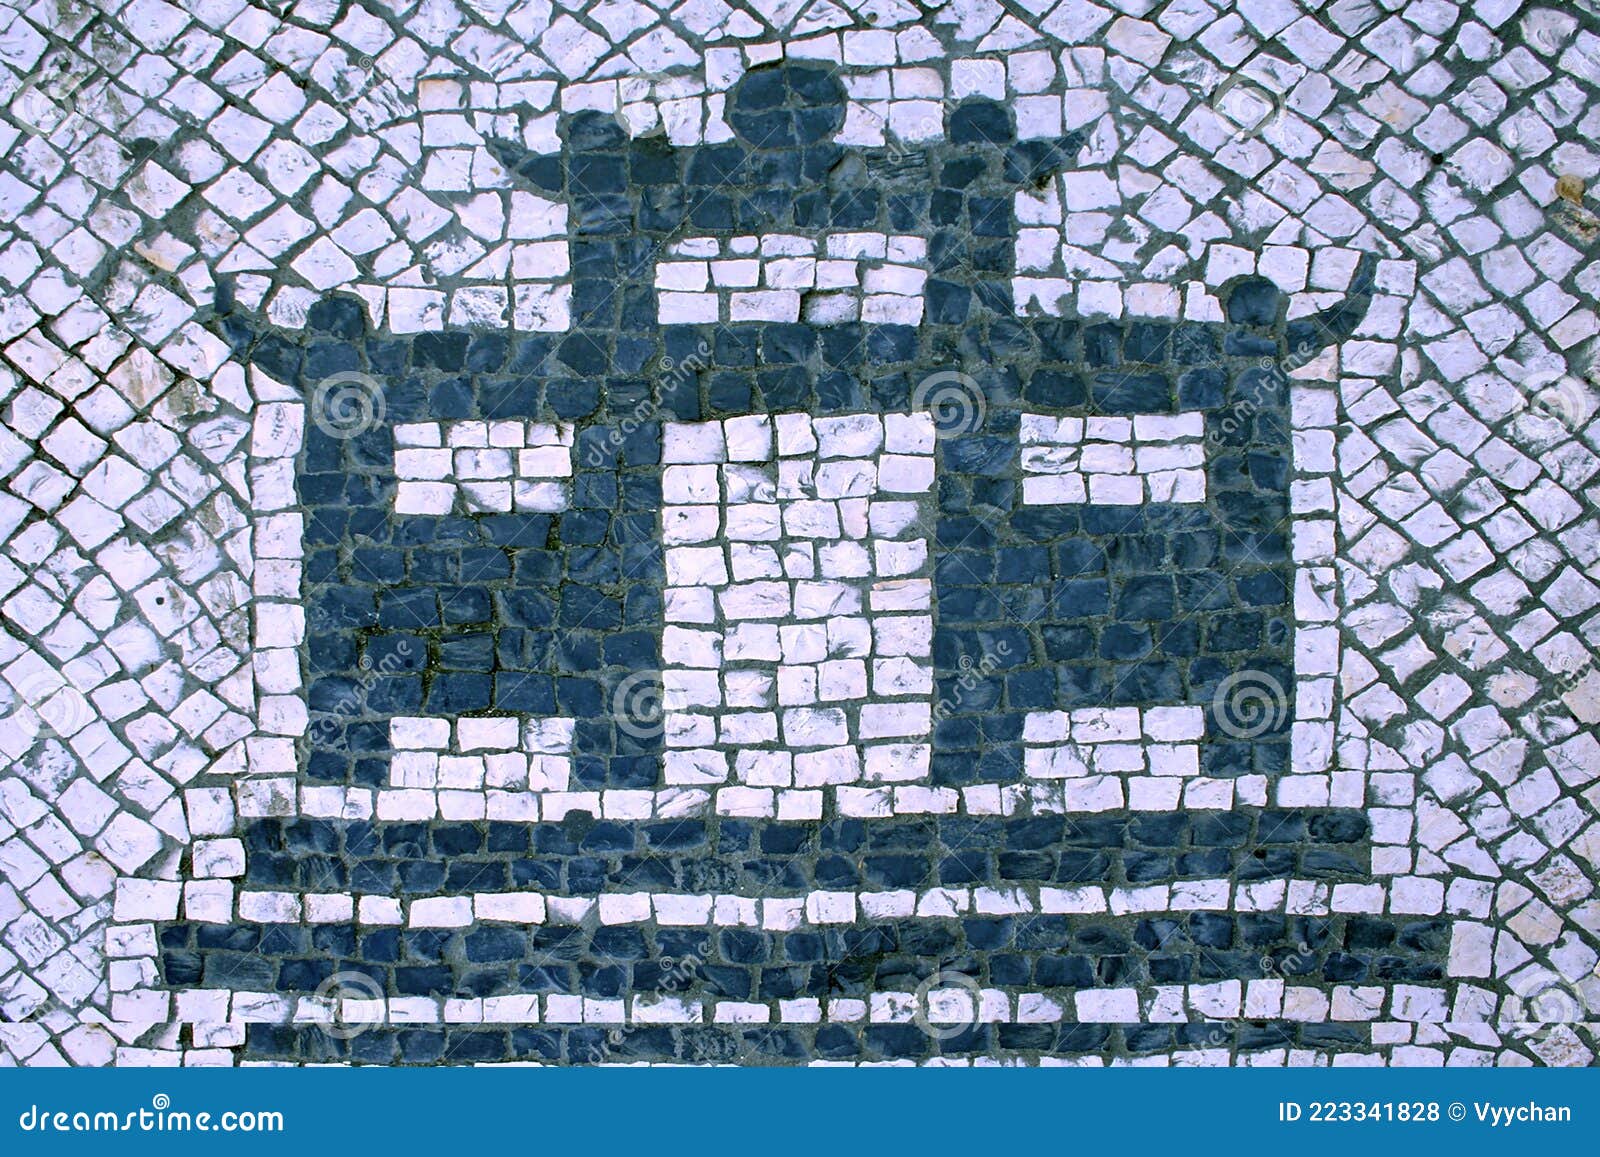 portuguese macau mosaic arts craftsmanship macao mosaico cobblestone street senado square cultural heritage architecture pattern